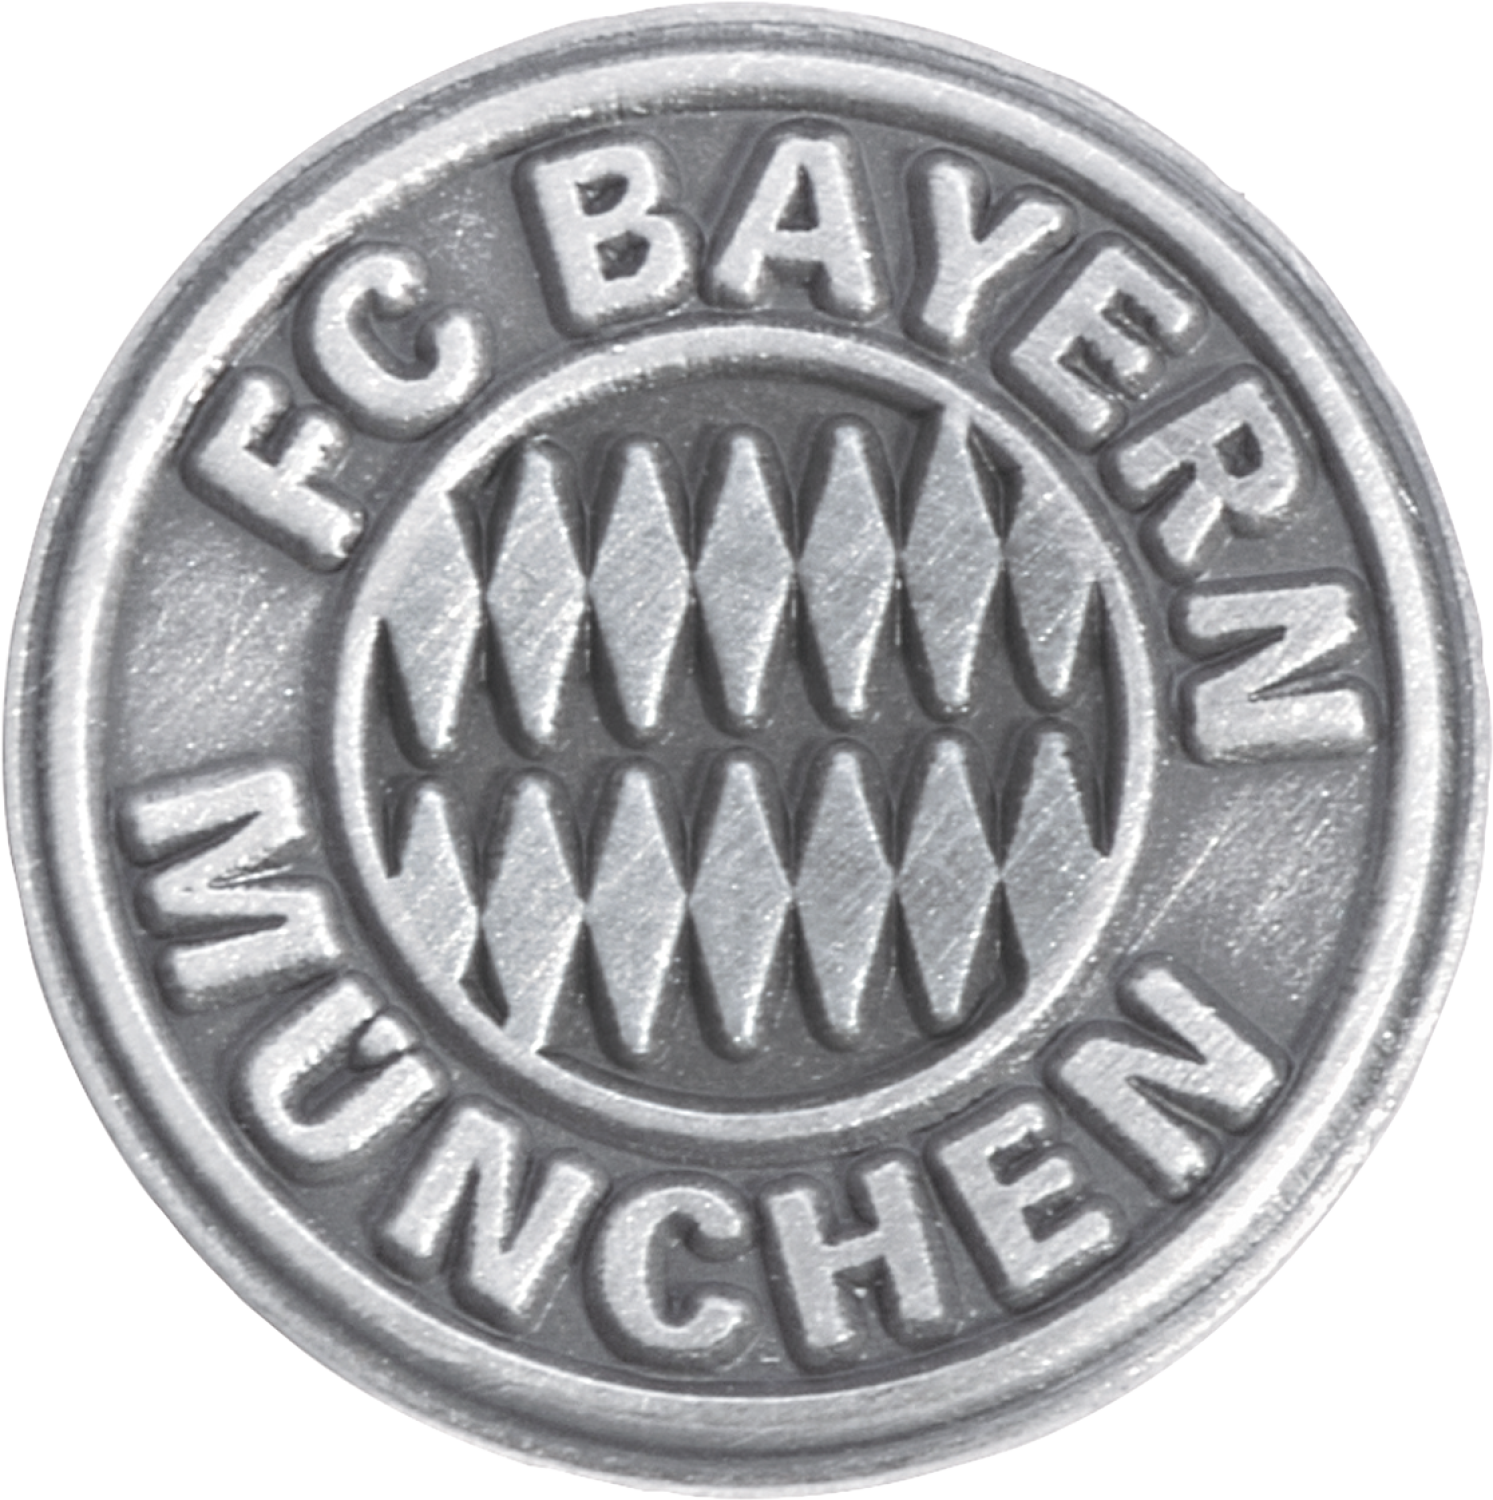 Download Fc Bayern Munchen Emblem Silver Pin Badge Dream League Soccer 2018 Bayern Munich Logo Png Image With No Background Pngkey Com